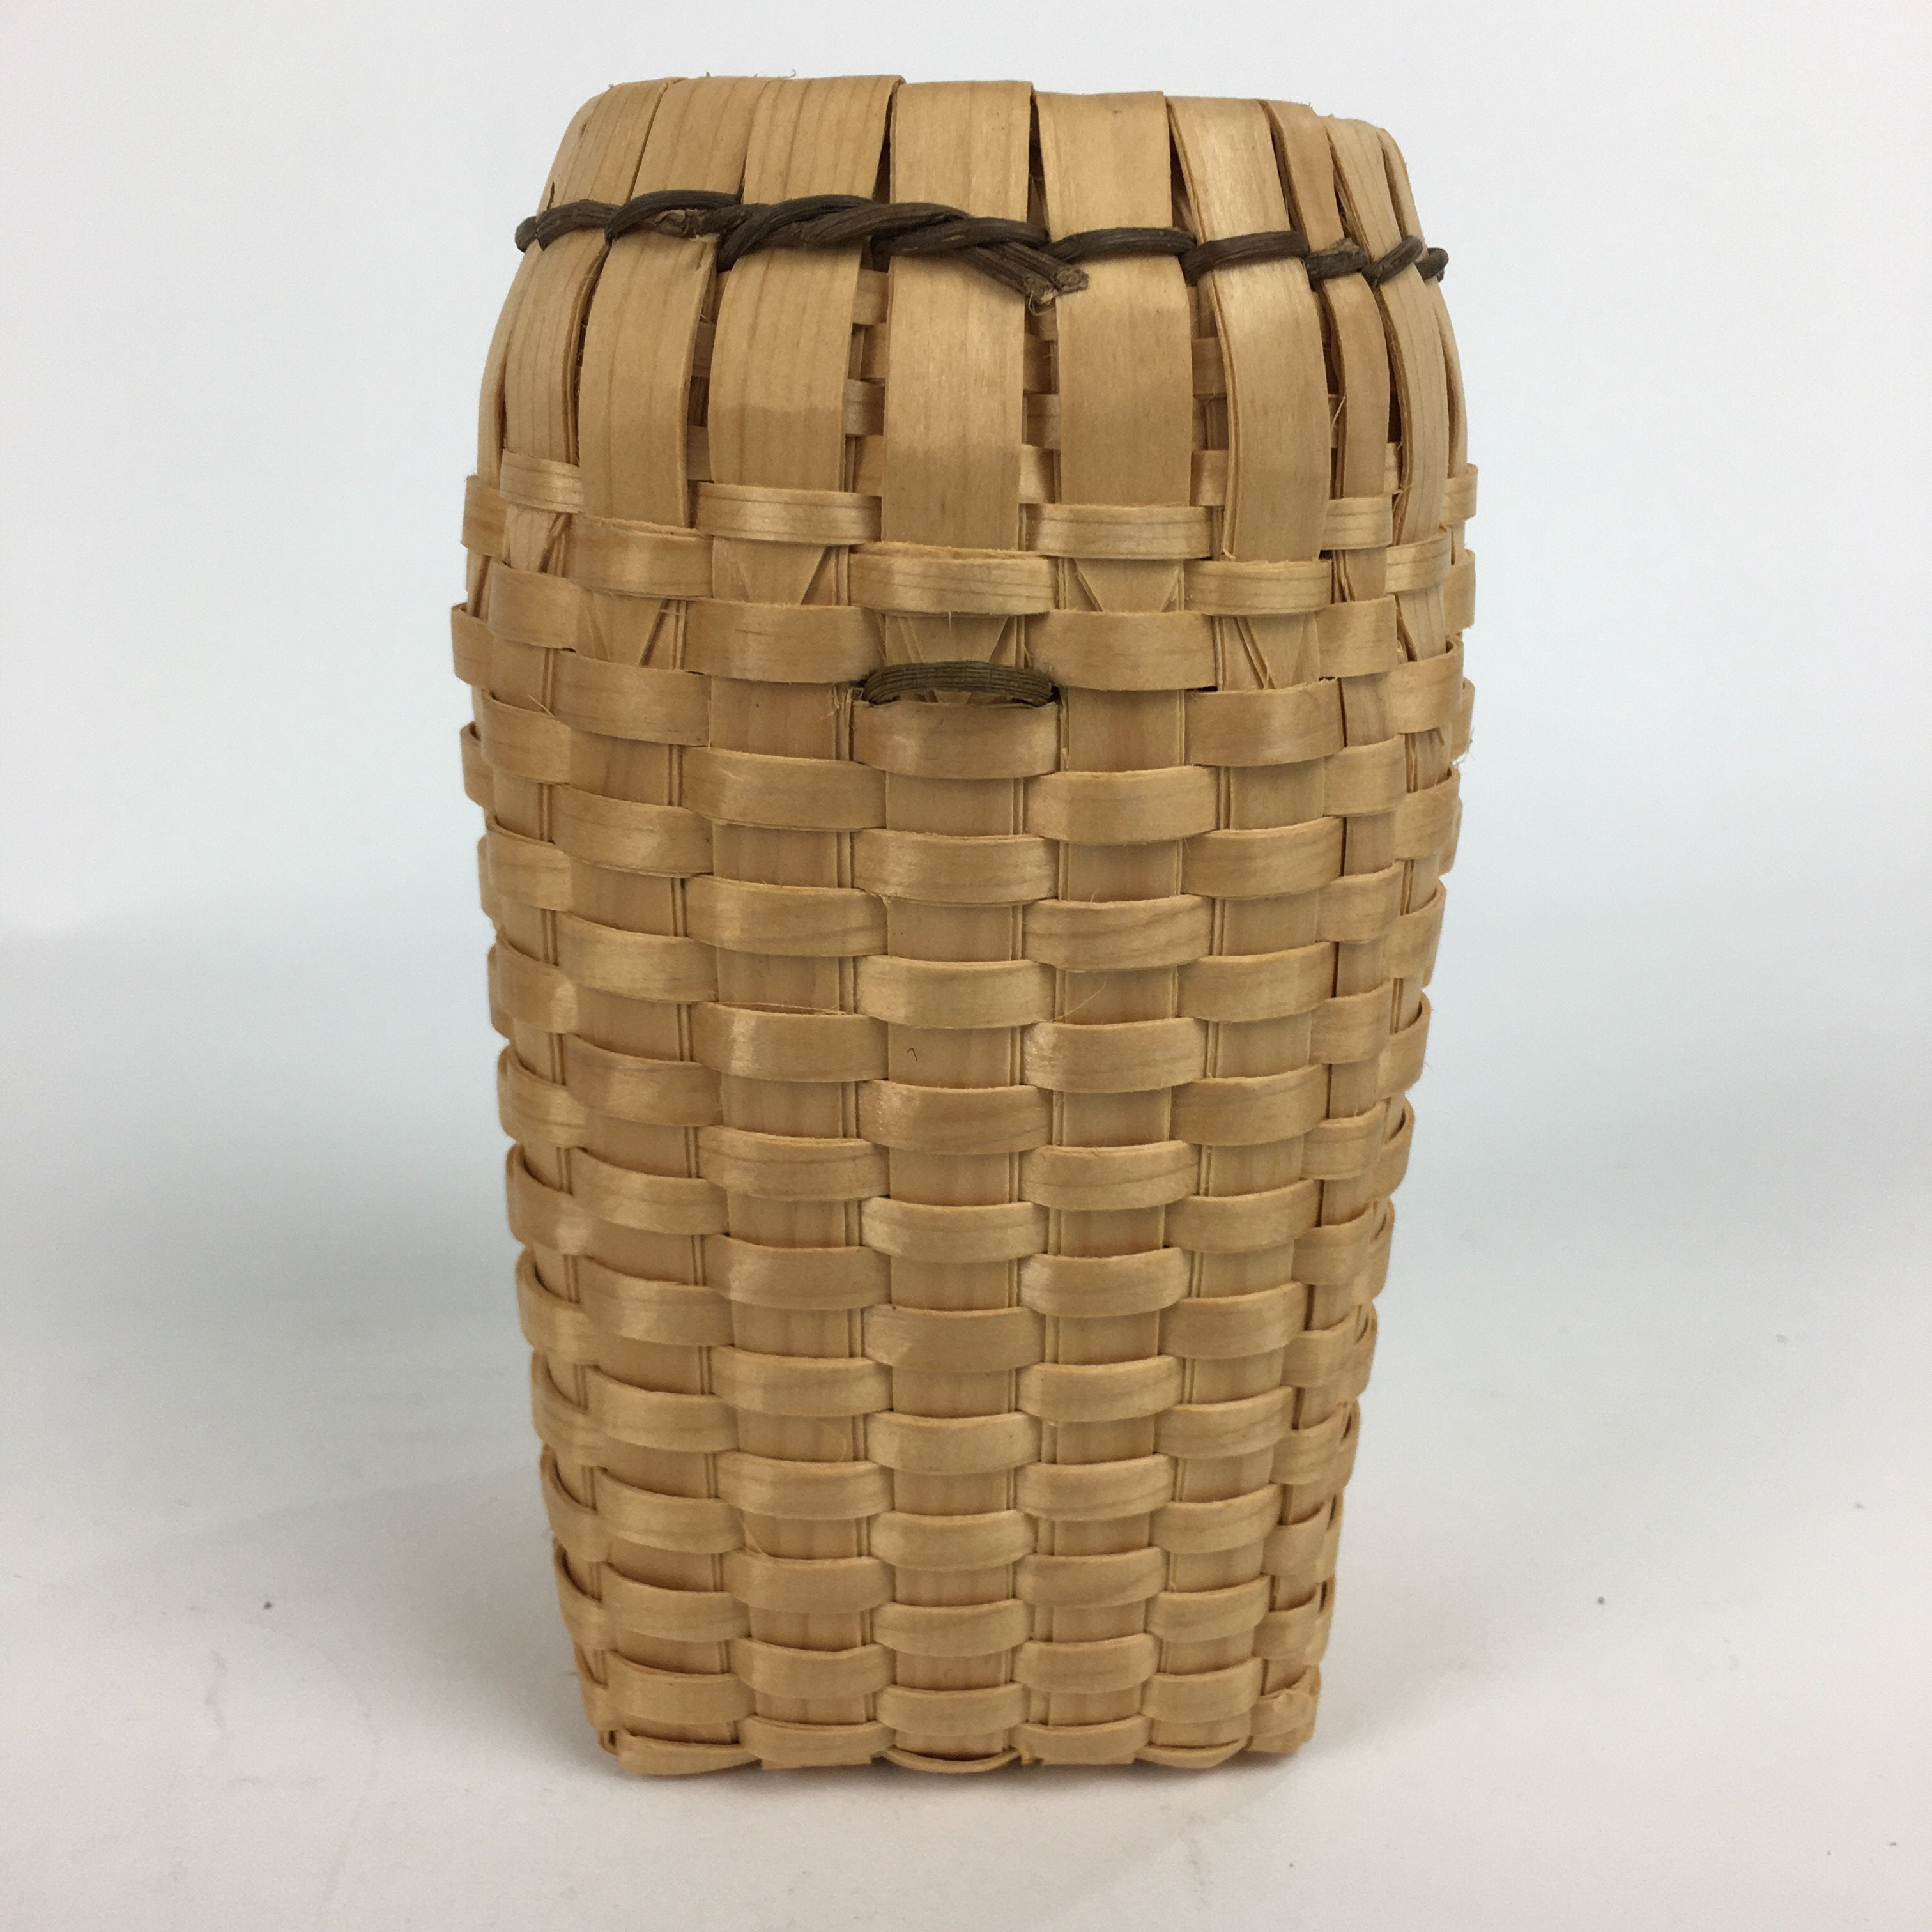 Japanese Wooden Basket Vtg Flower Vase Ikebana Arrangement Kago Kado B174